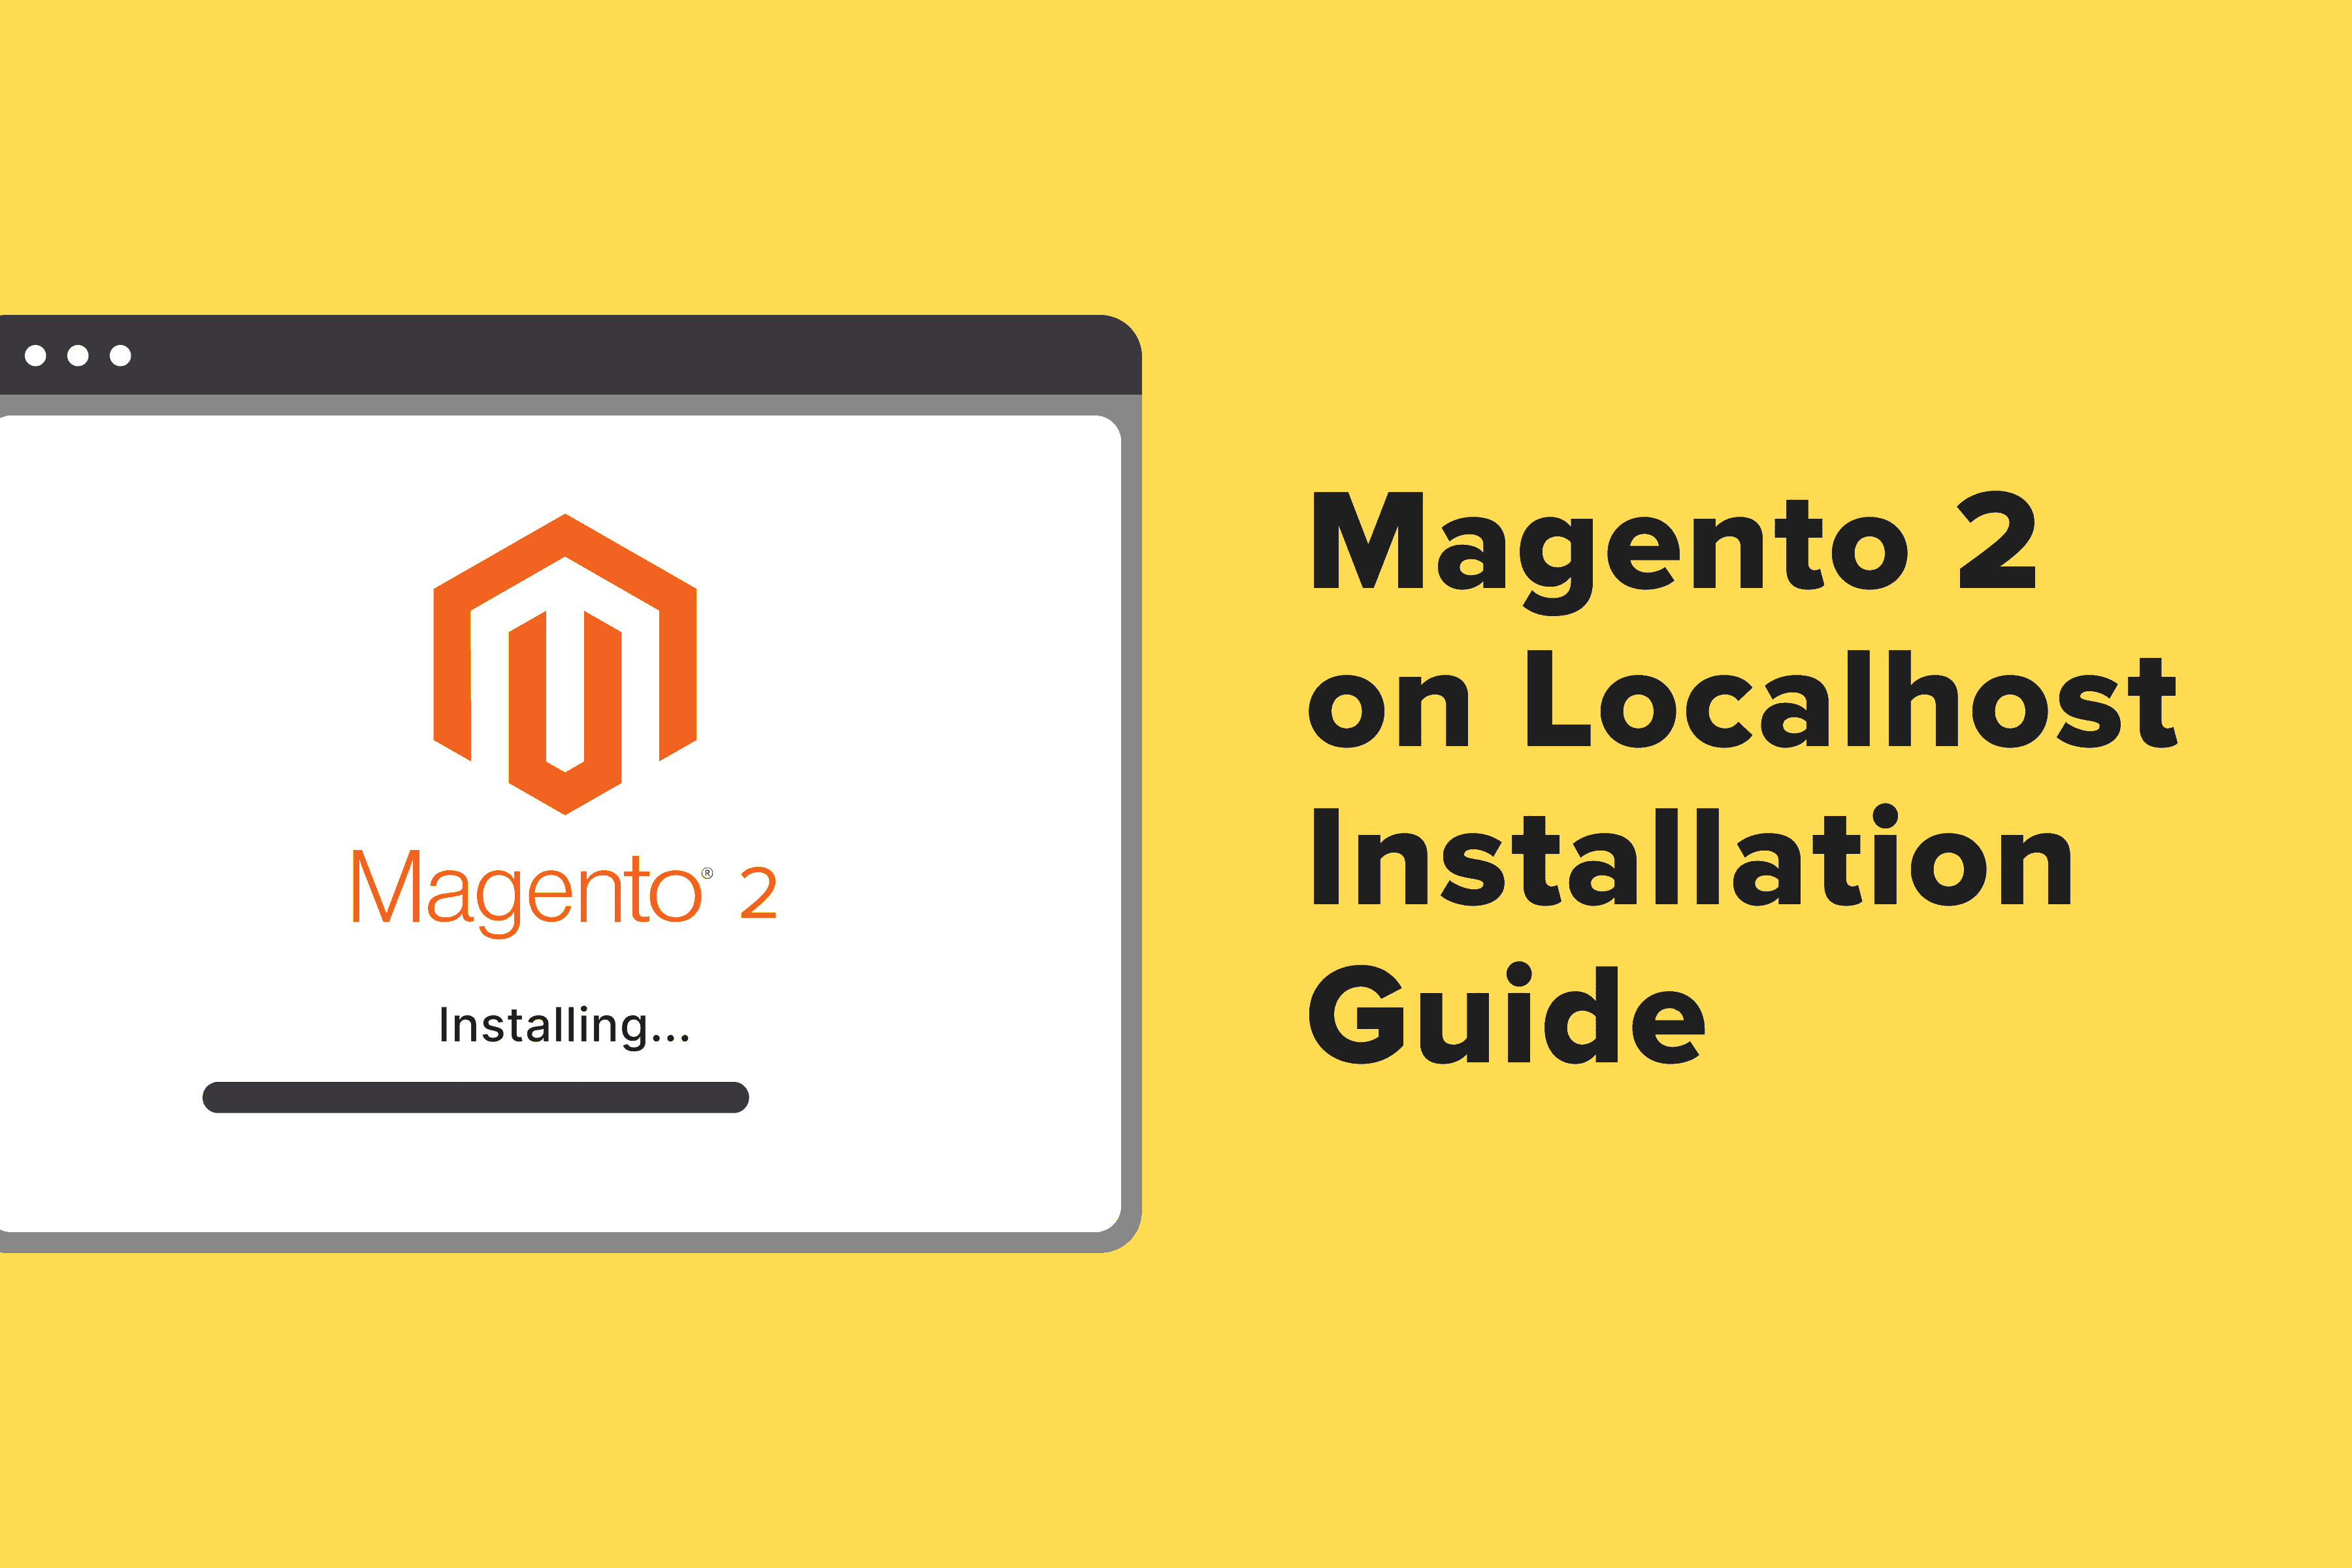 Magento 2 on Localhost Installation